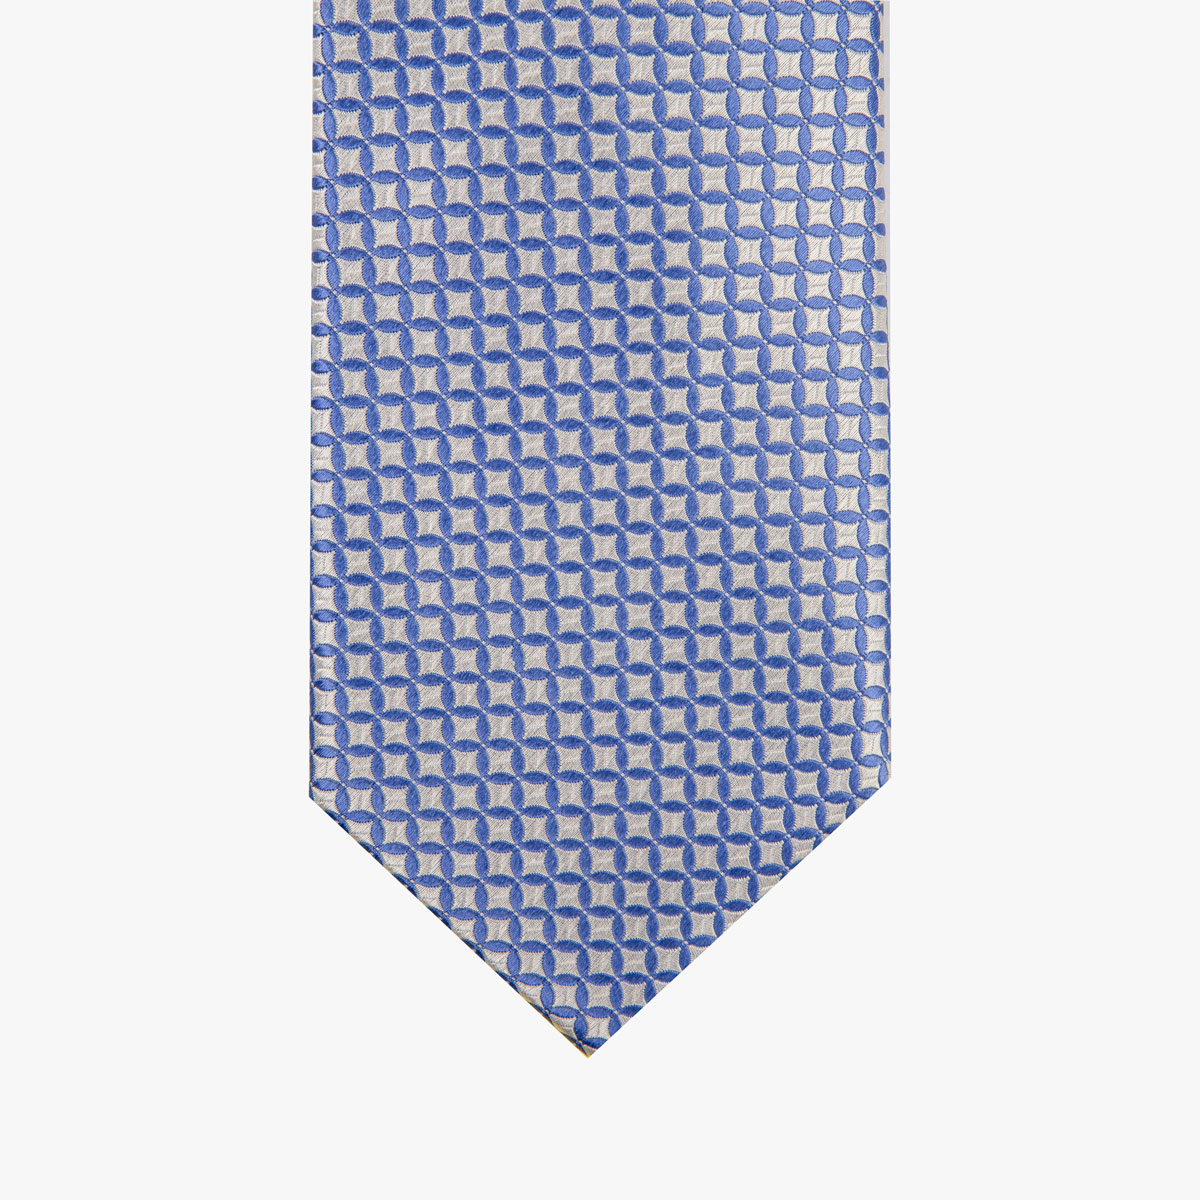 Glatte Krawatte mit geometrischem Muster in hellblau grau